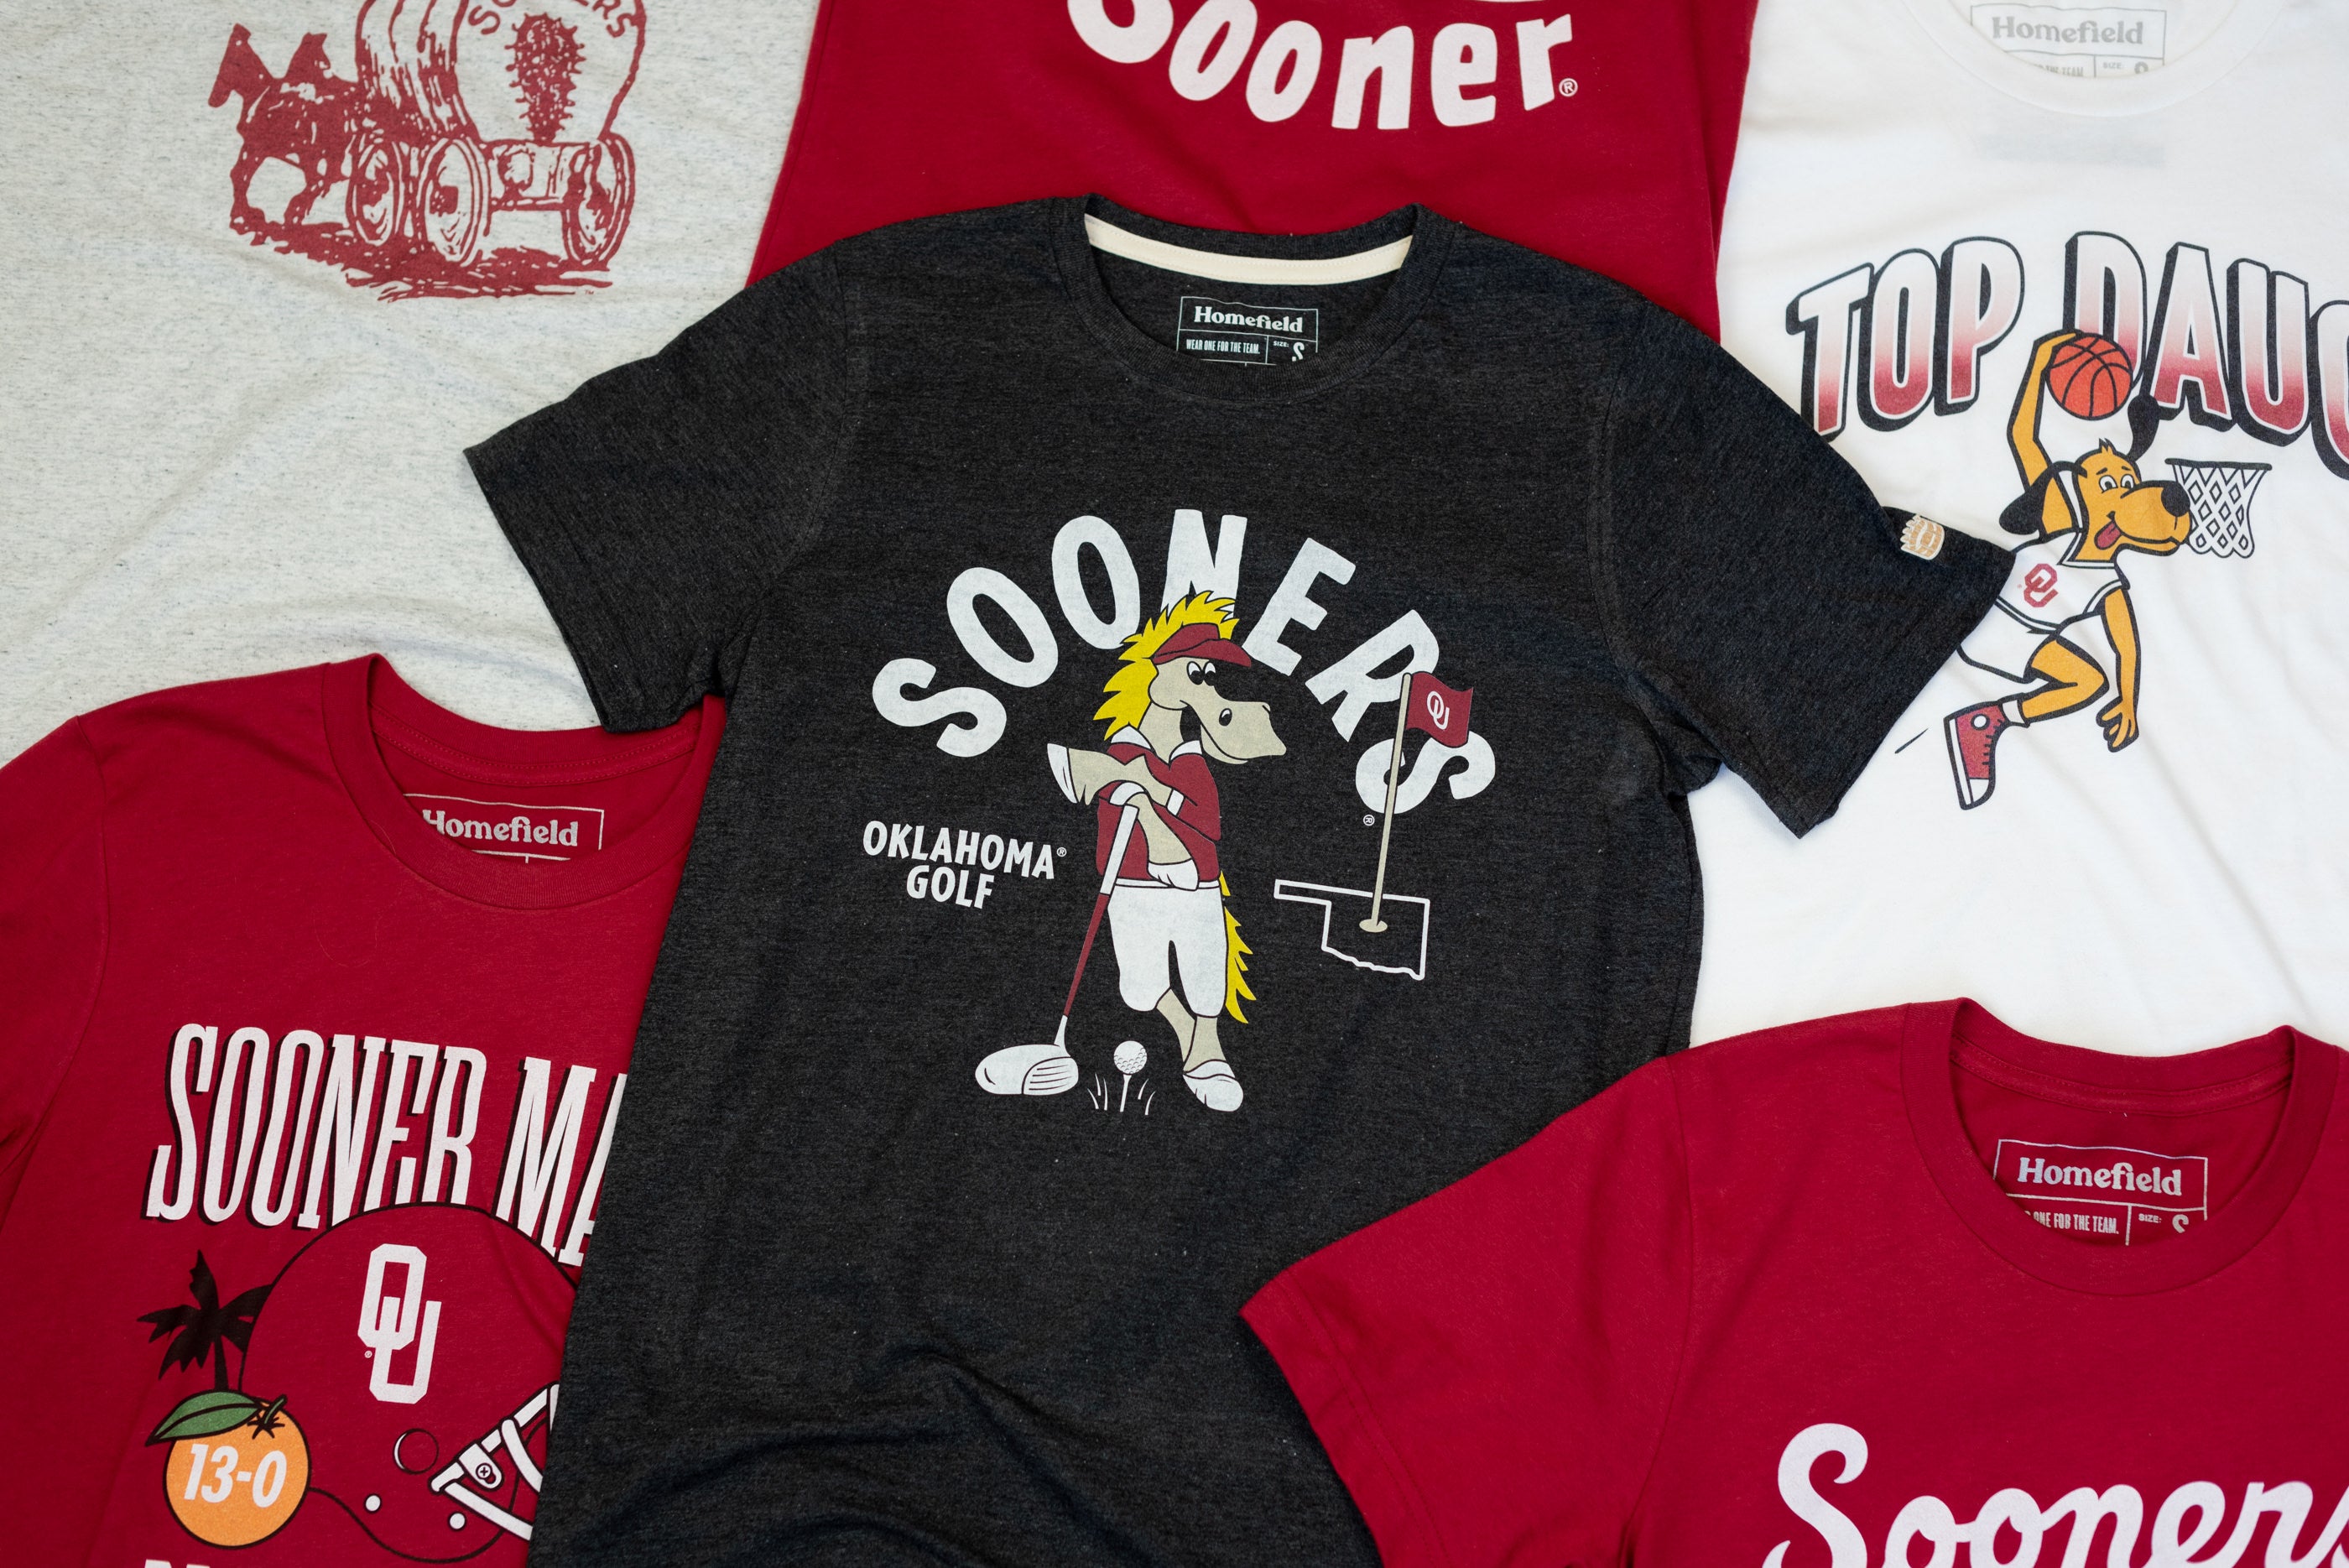 Vintage Oklahoma Sooners Apparel: Shirts and Sweatshirts | Homefield